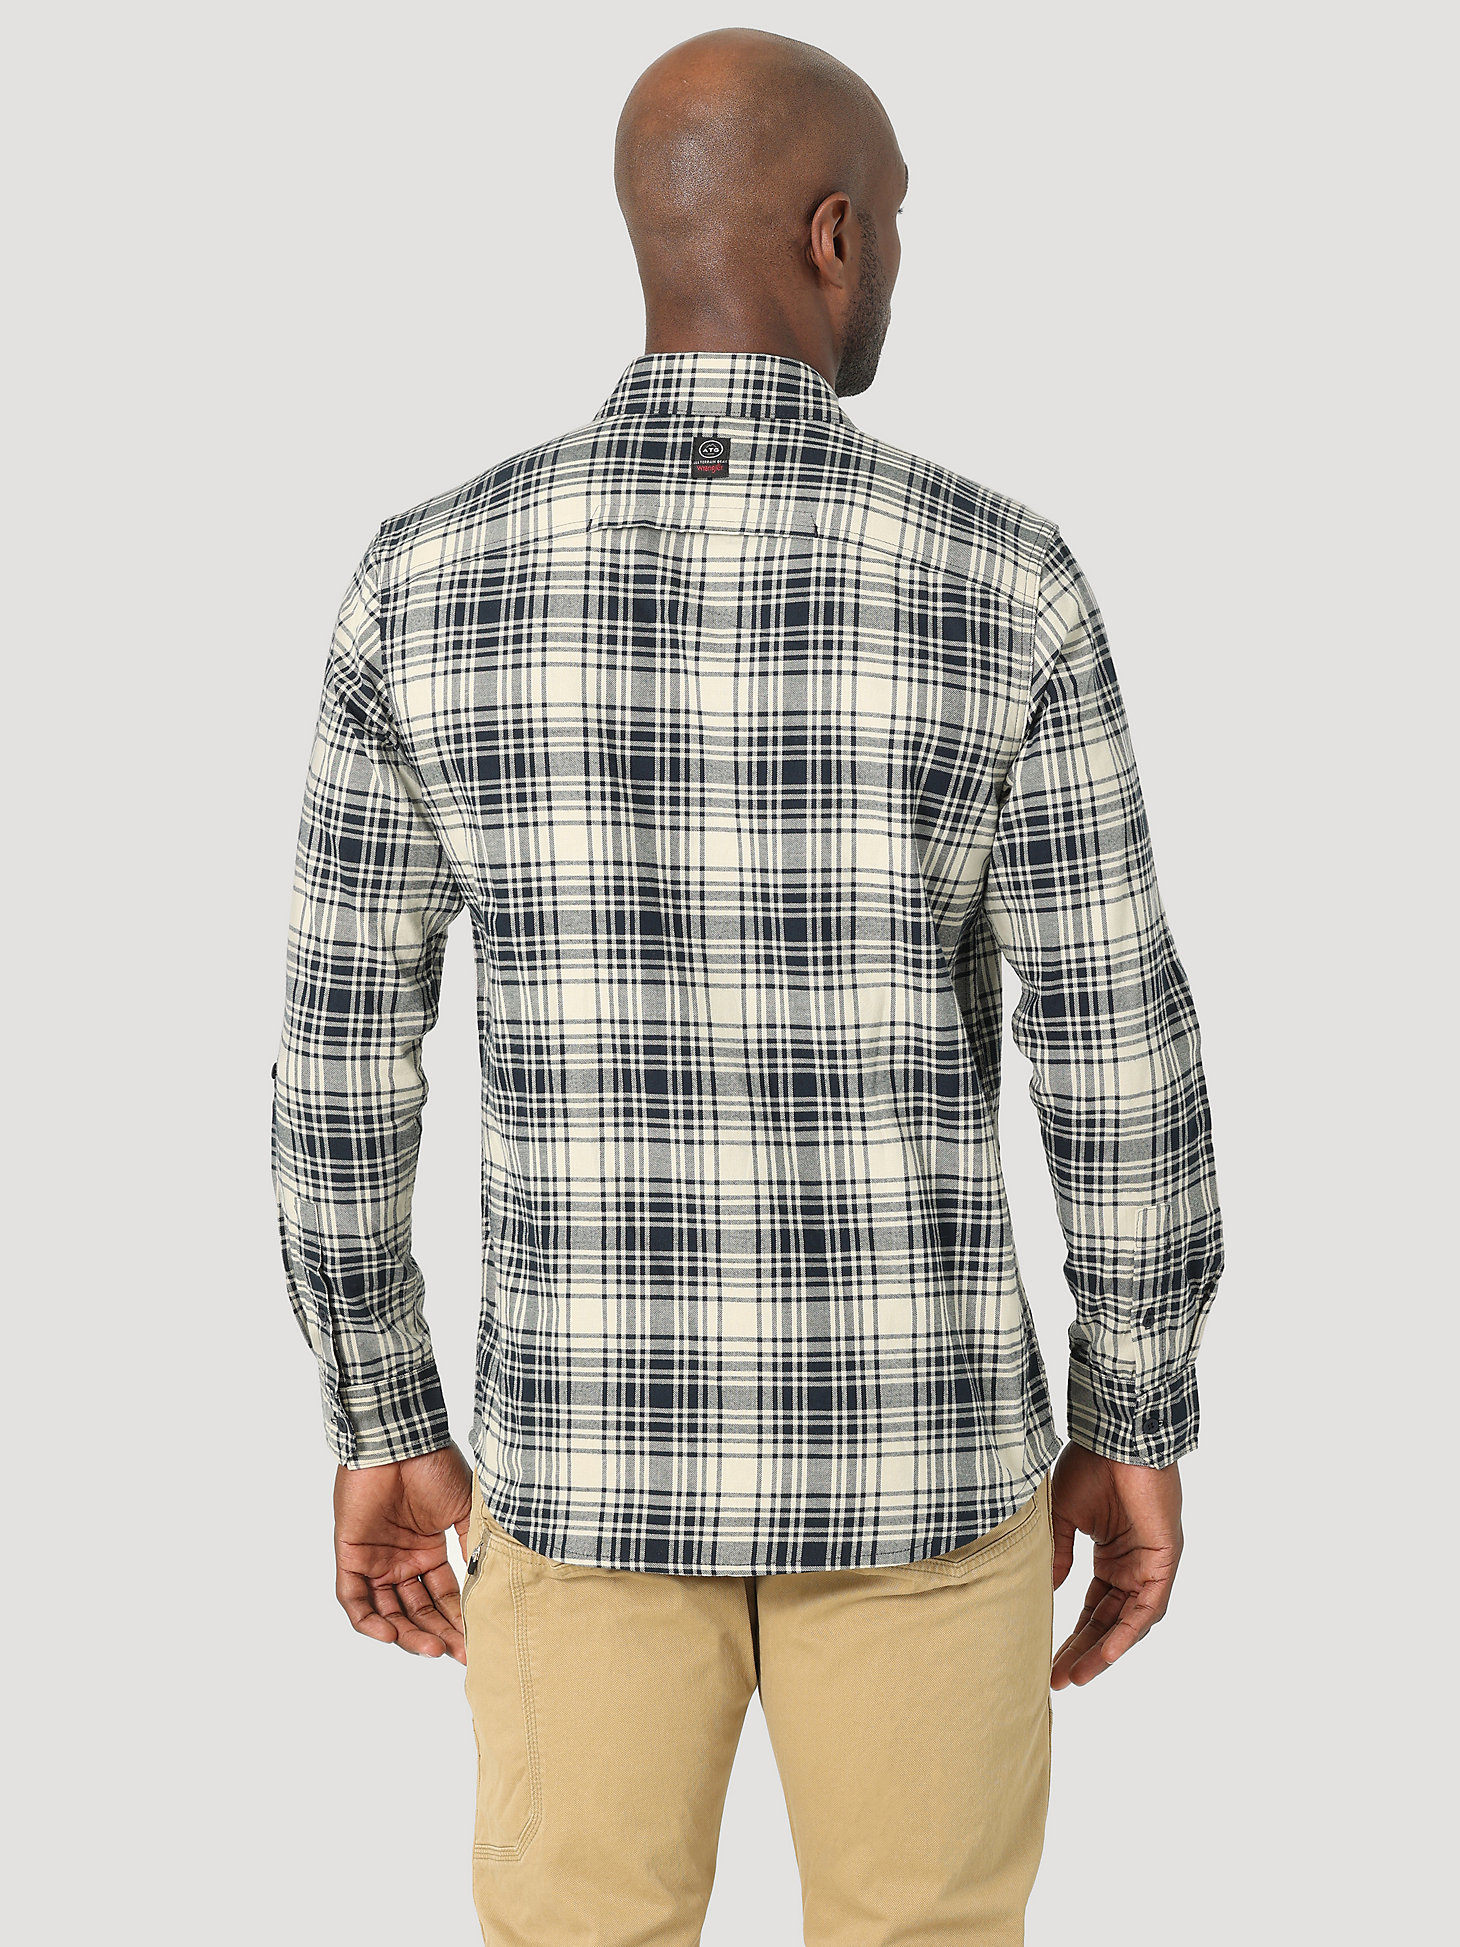 ATG By Wrangler™ Men's Two Pocket Plaid Utility Shirt in Shepherd Pelican alternative view 1